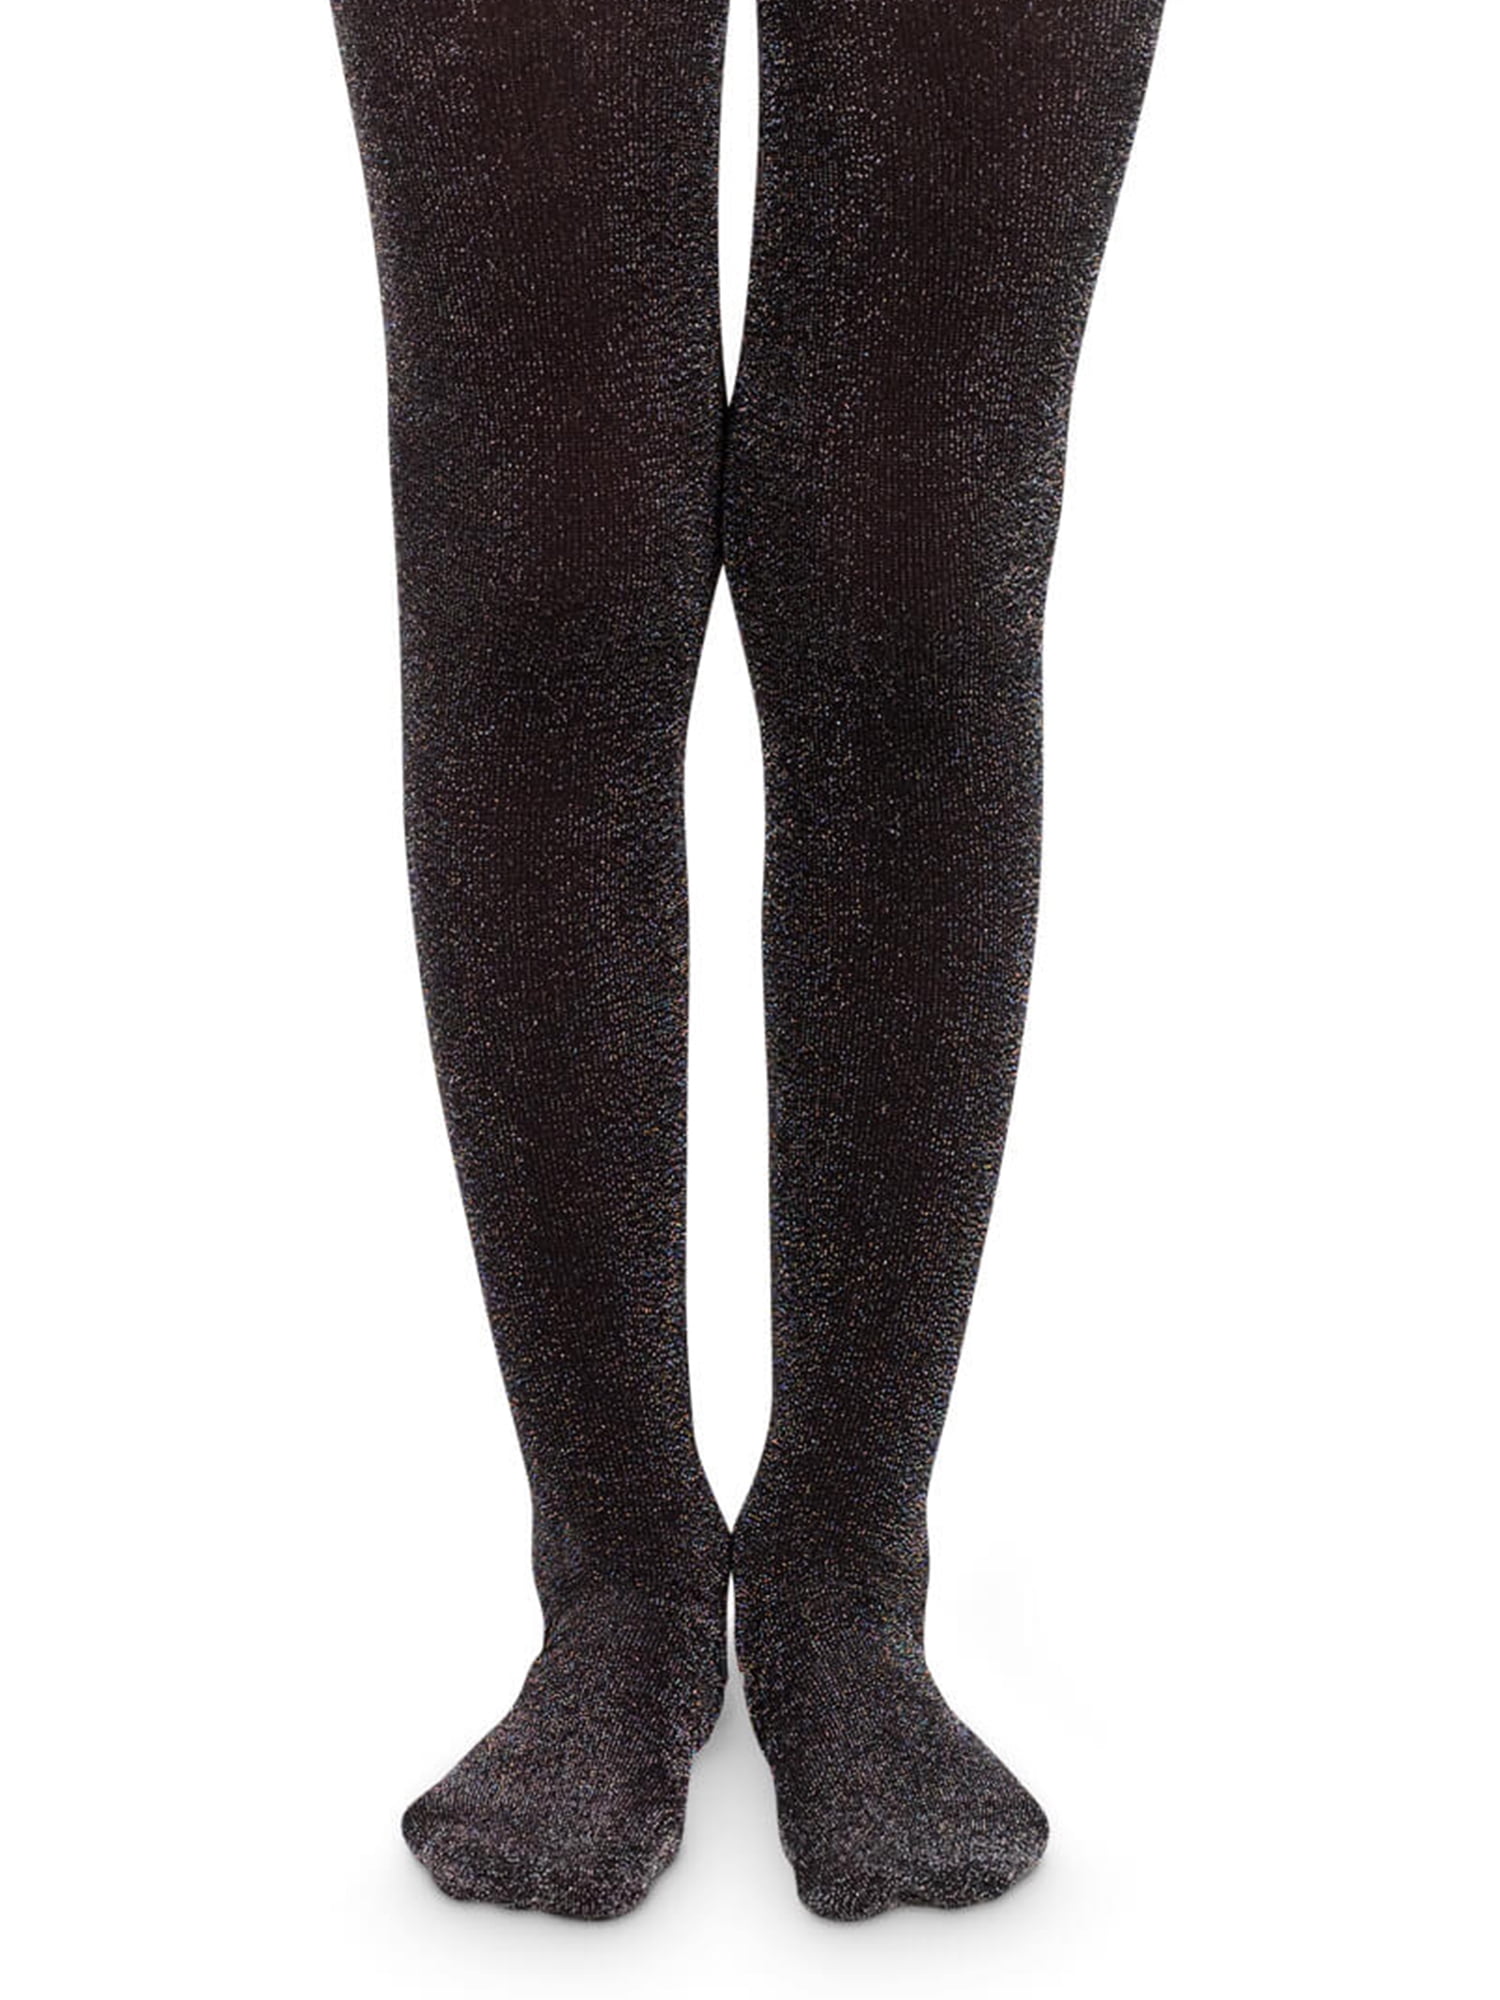 Jefferies Socks Girls Sparkle Tights 1-Pack, Sizes XS-L 